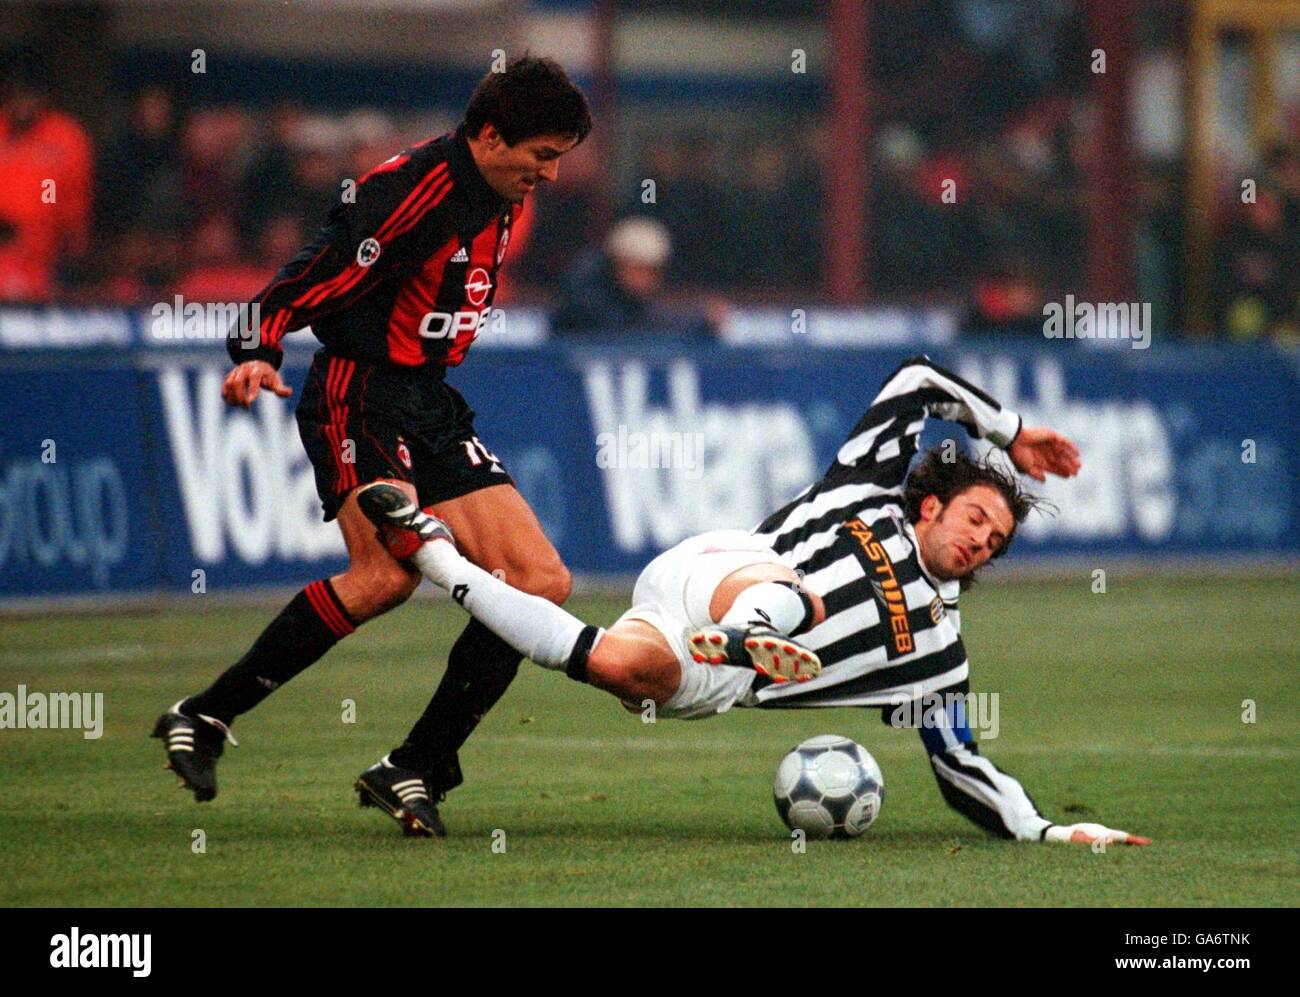 Italian Soccer -Serie A - AC Milan v Juventus. Juventus' Alessandro Del Piero (r) is sent sprawling by the challenge of AC Milan's Jose Antonio Chamot (l) Stock Photo